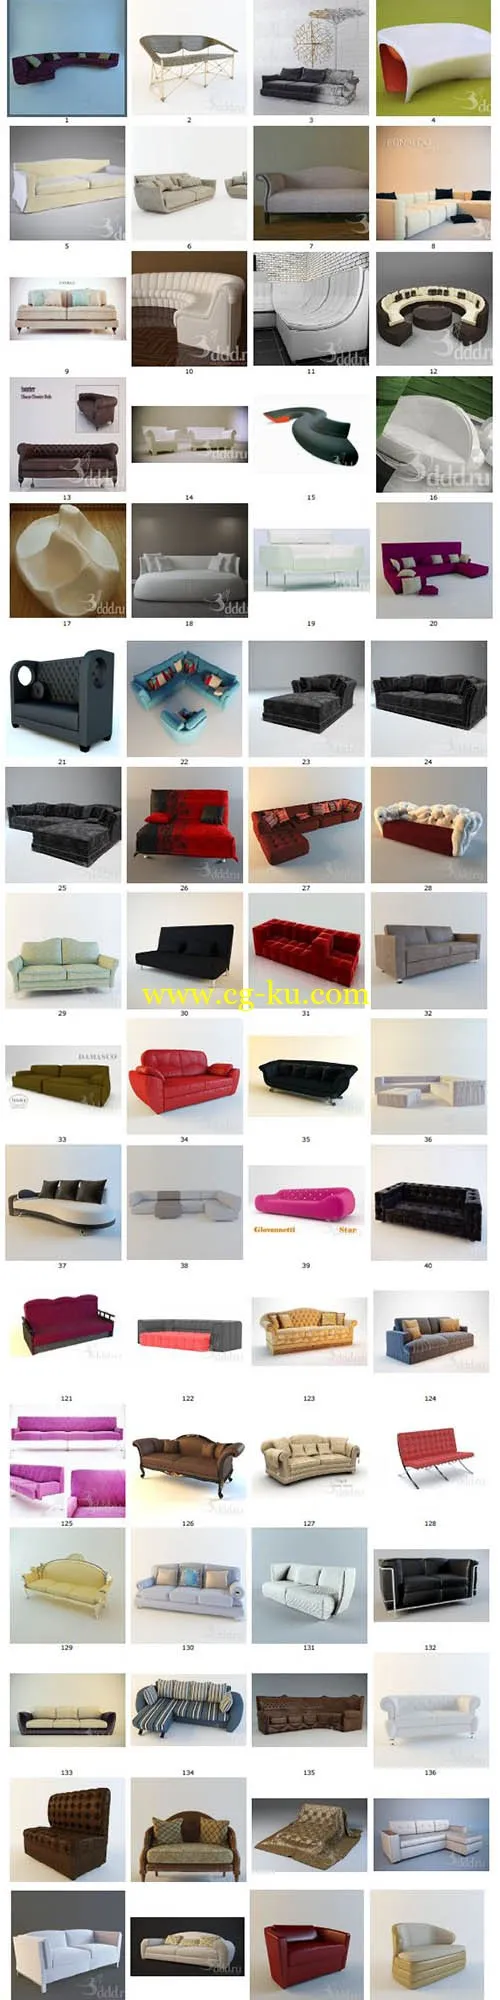 3DDD Sofa 3D models的图片1